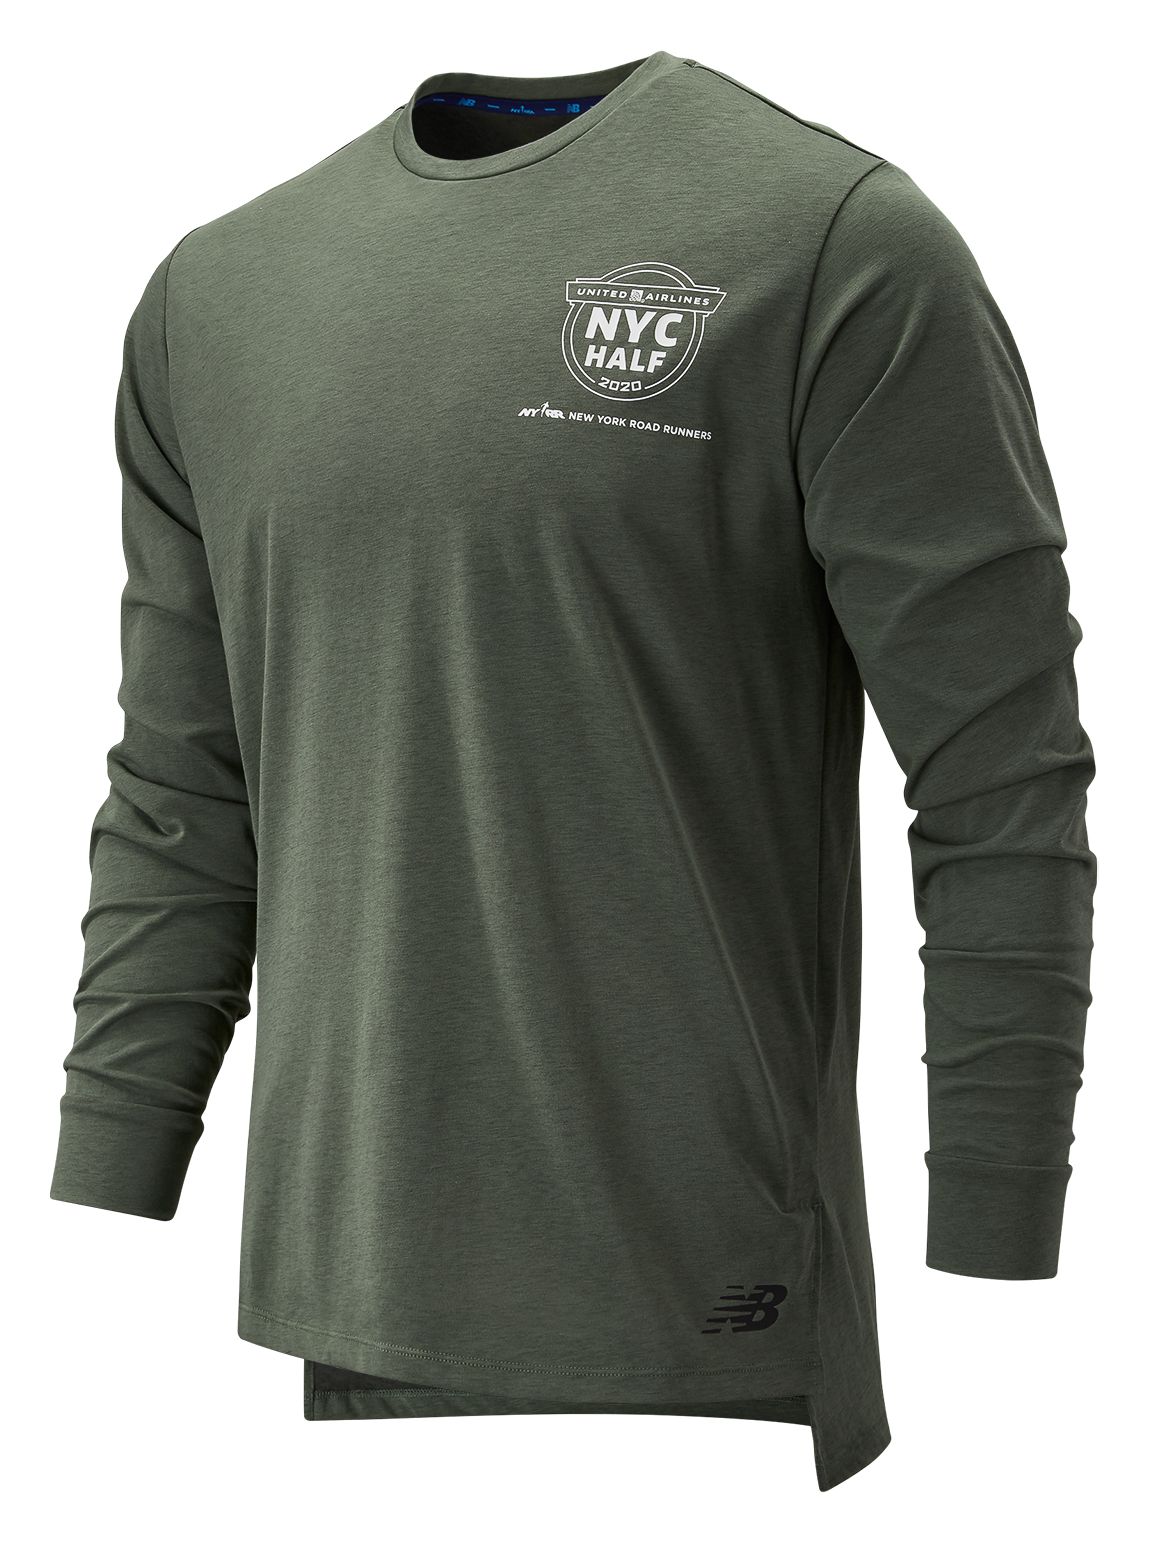 United Airlines NYC Half Marathon Shirts & Gear - New Balance